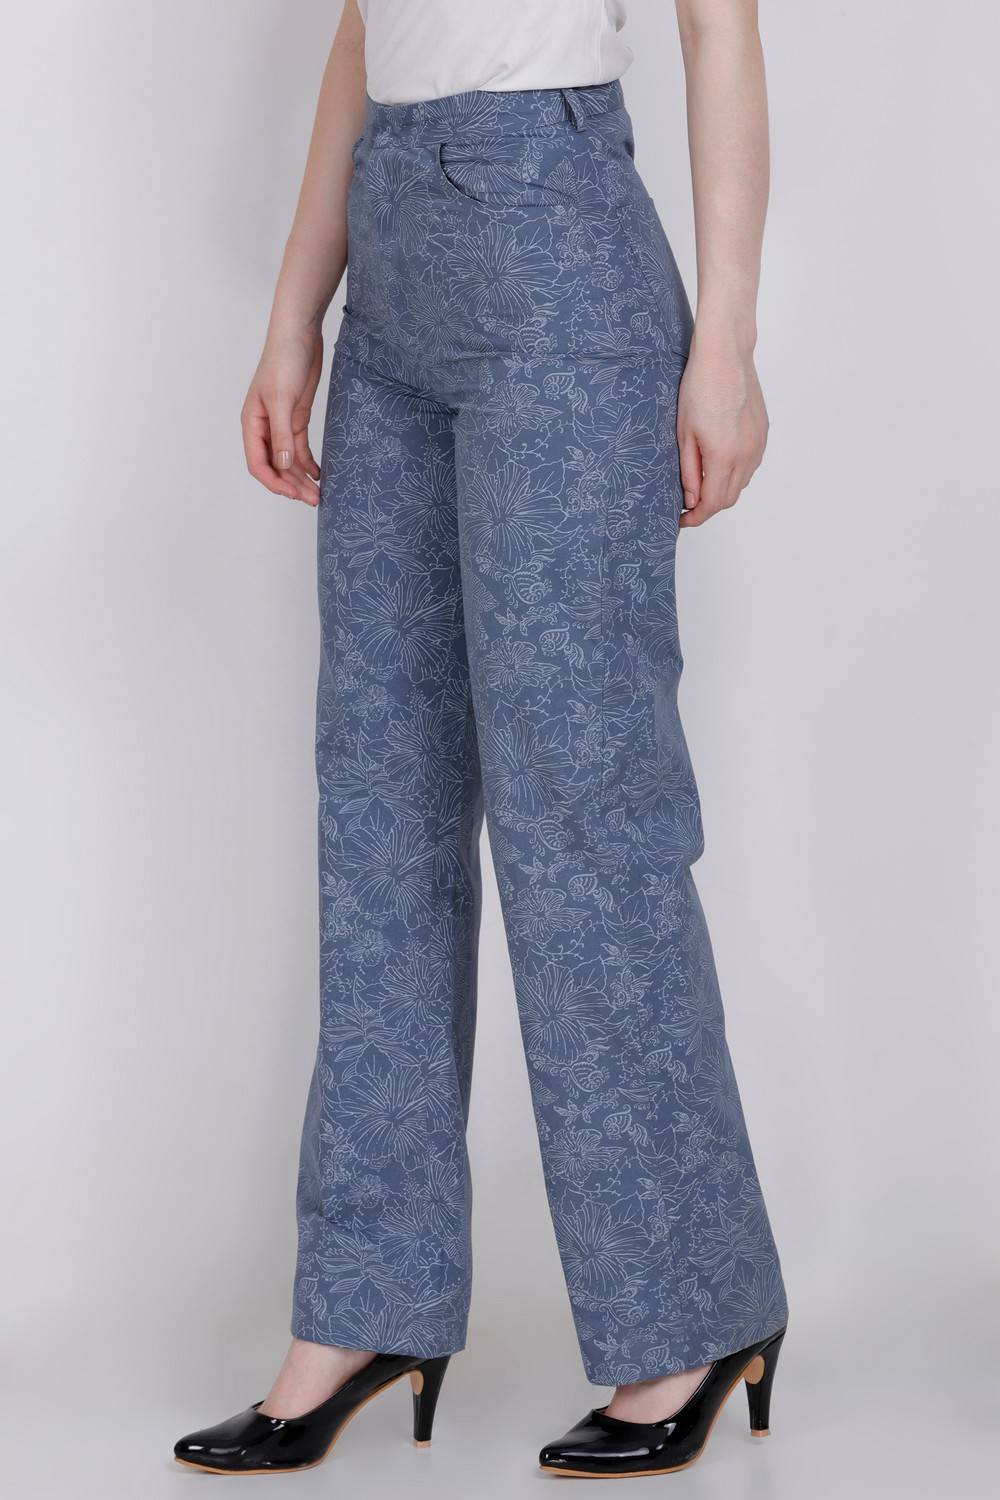 LASTINCH All Sizes Blue Printed Trouser XXS-8XL